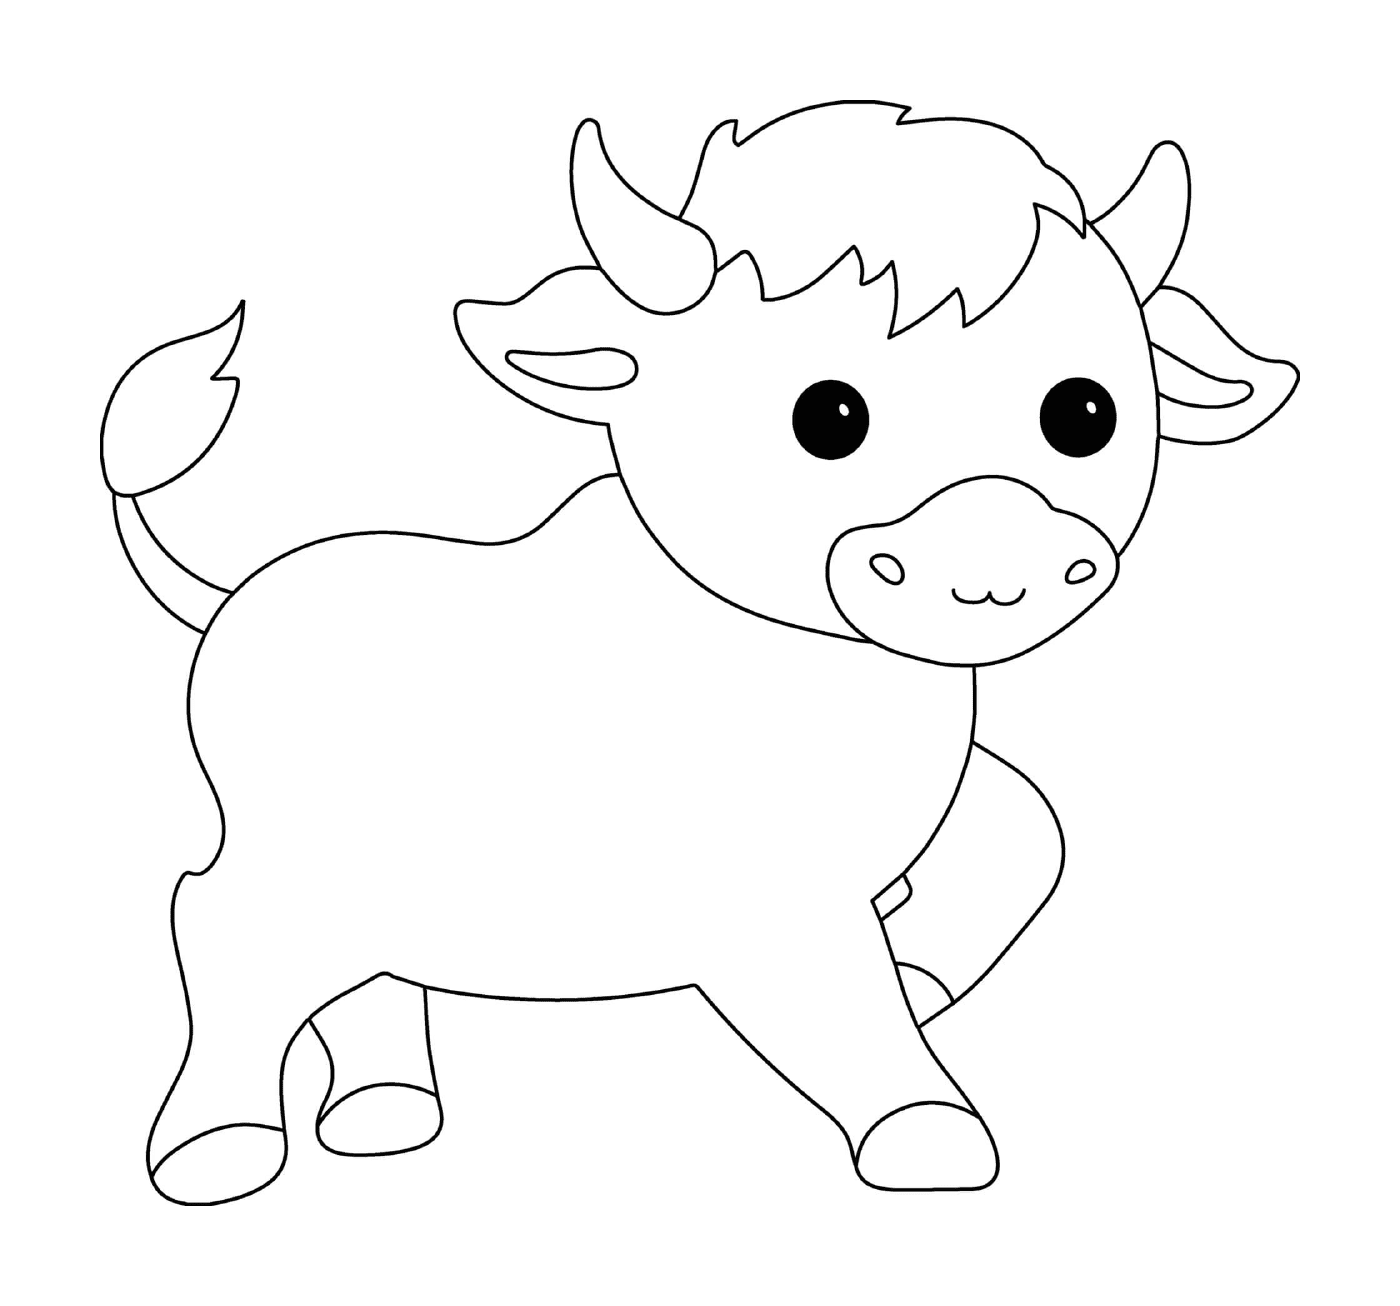  gado bovino bovino 